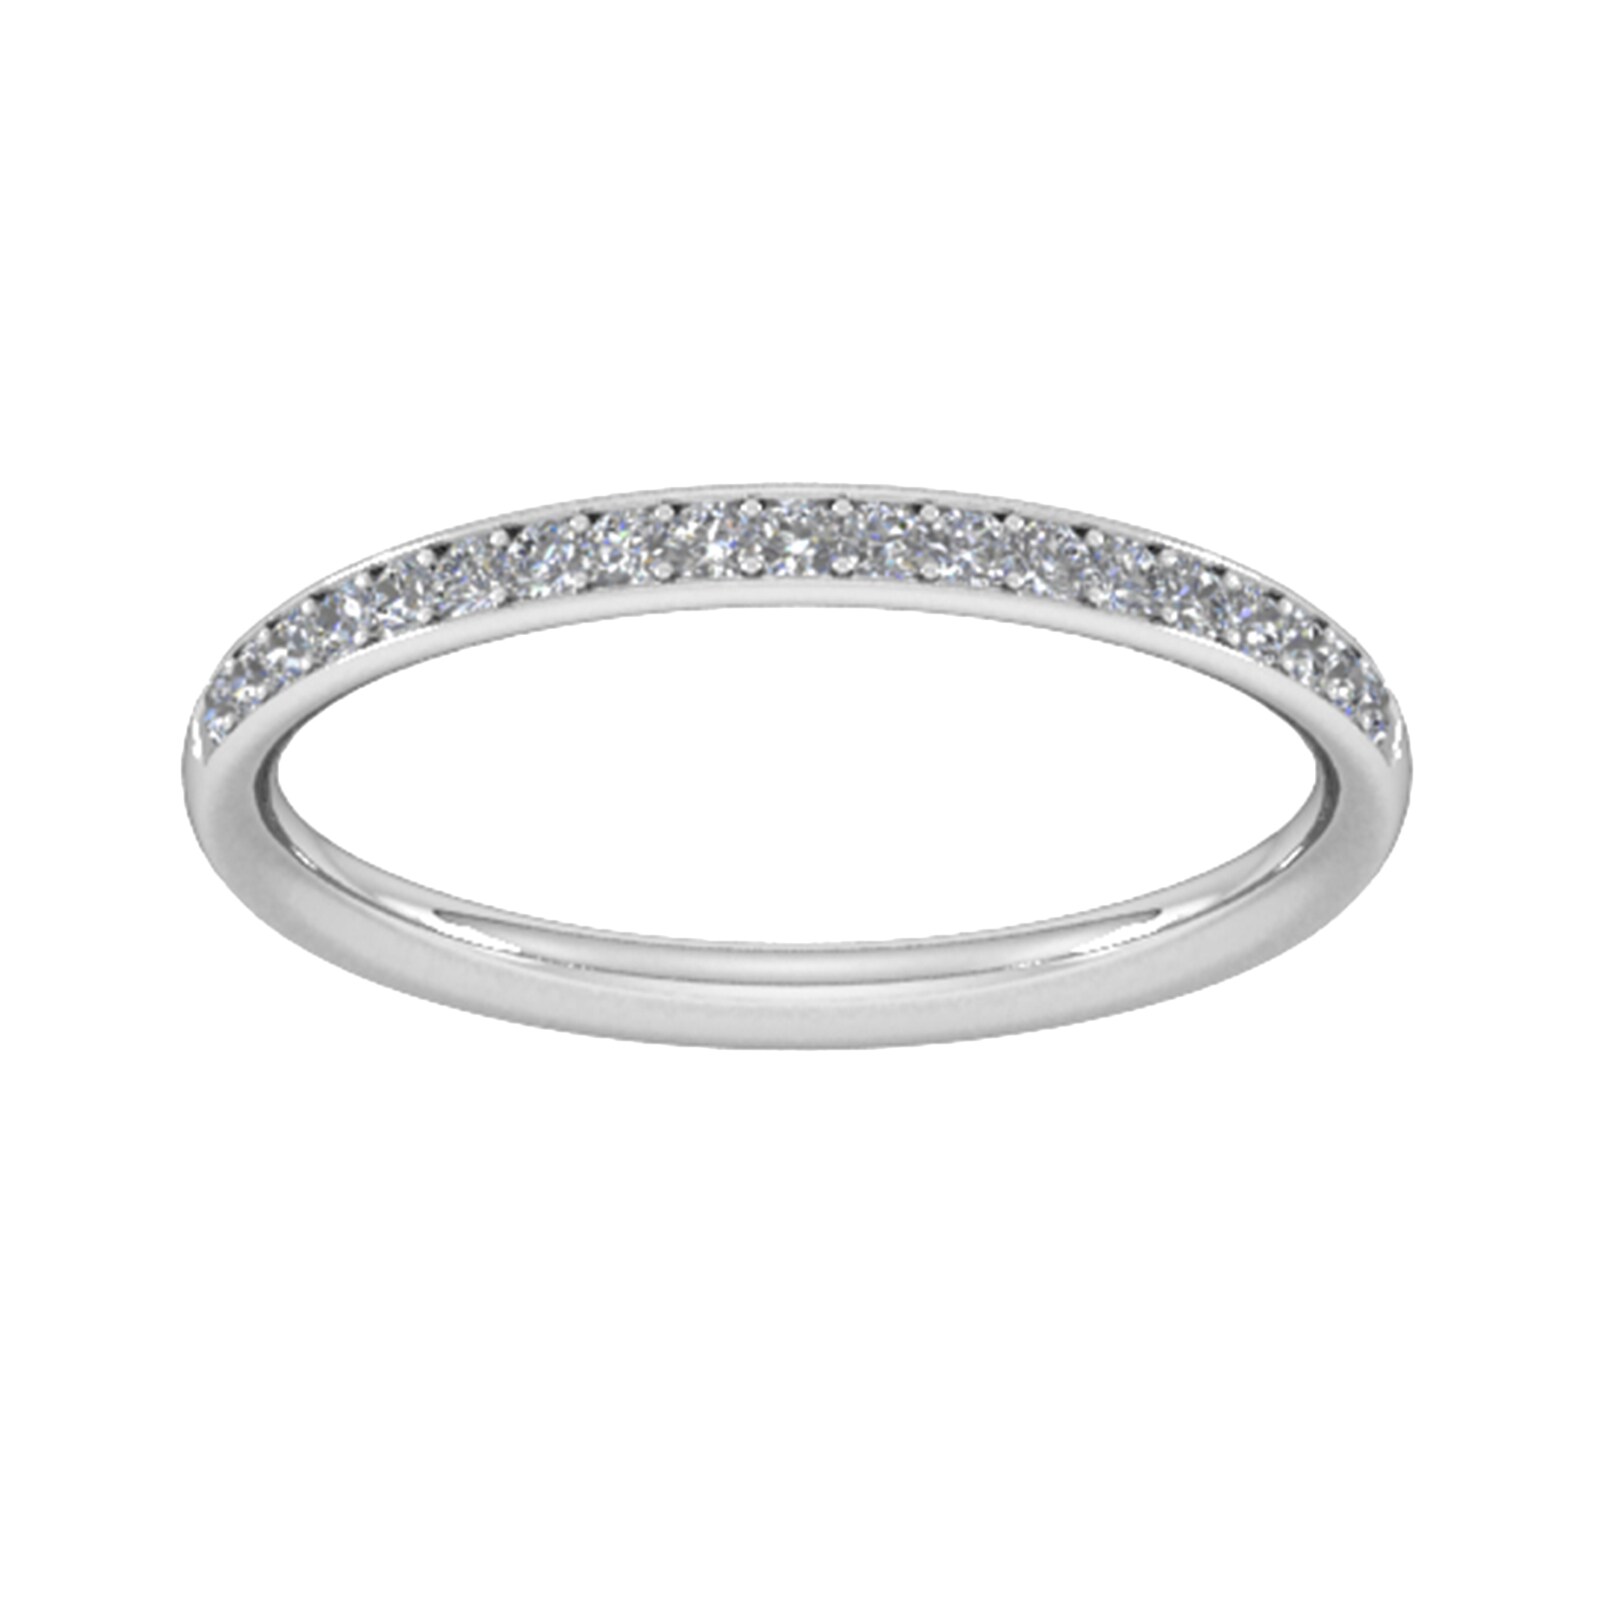 0.18 Carat Total Weight Brilliant Cut Grain Set Diamond Wedding Ring In 9 Carat White Gold - Ring Size G